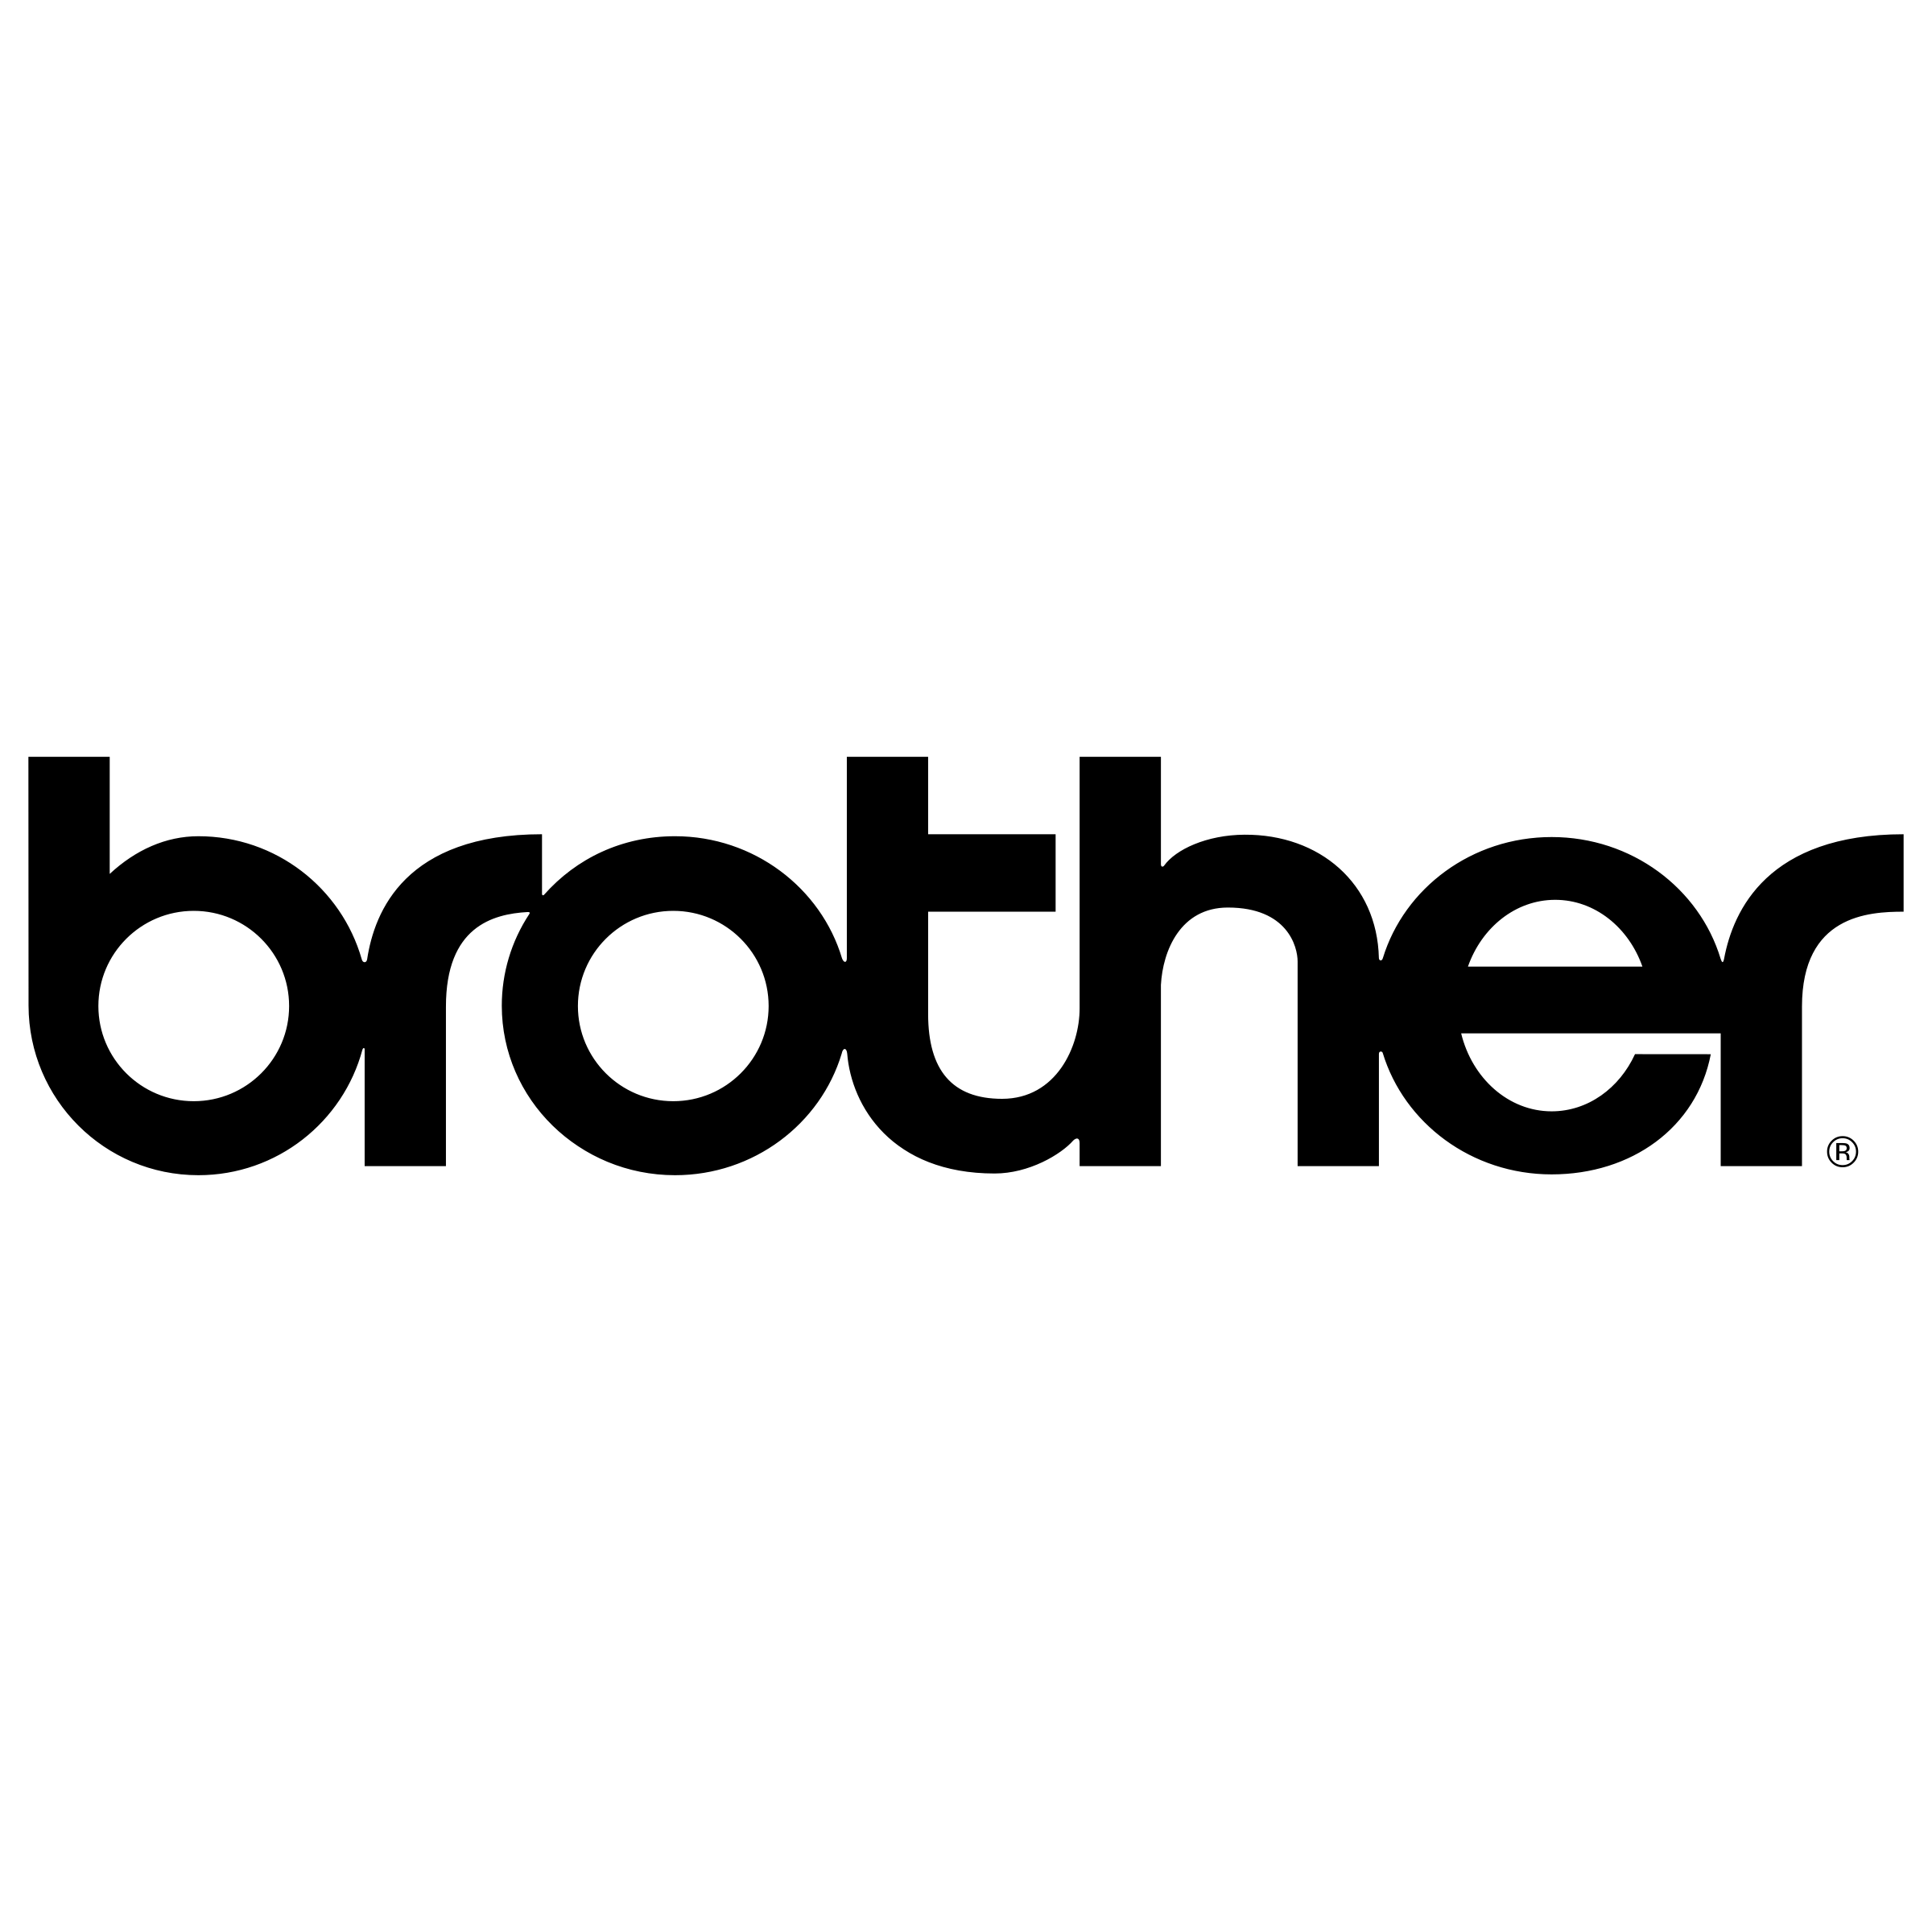 Brother Logo - Brother Logo PNG Transparent & SVG Vector - Freebie Supply